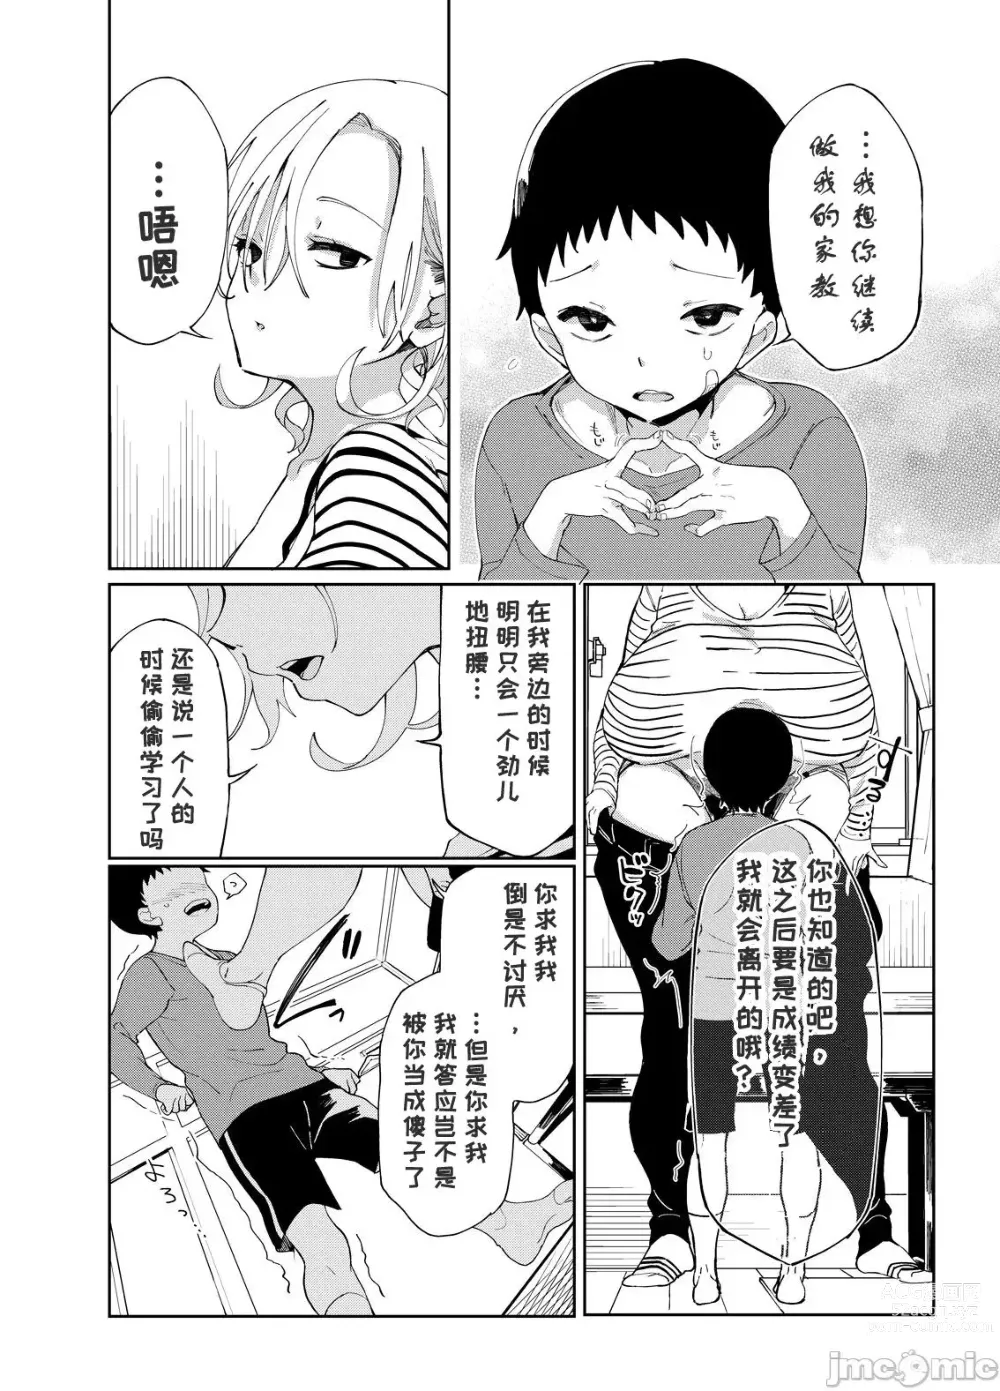 Page 17 of manga Chichi Showtime!